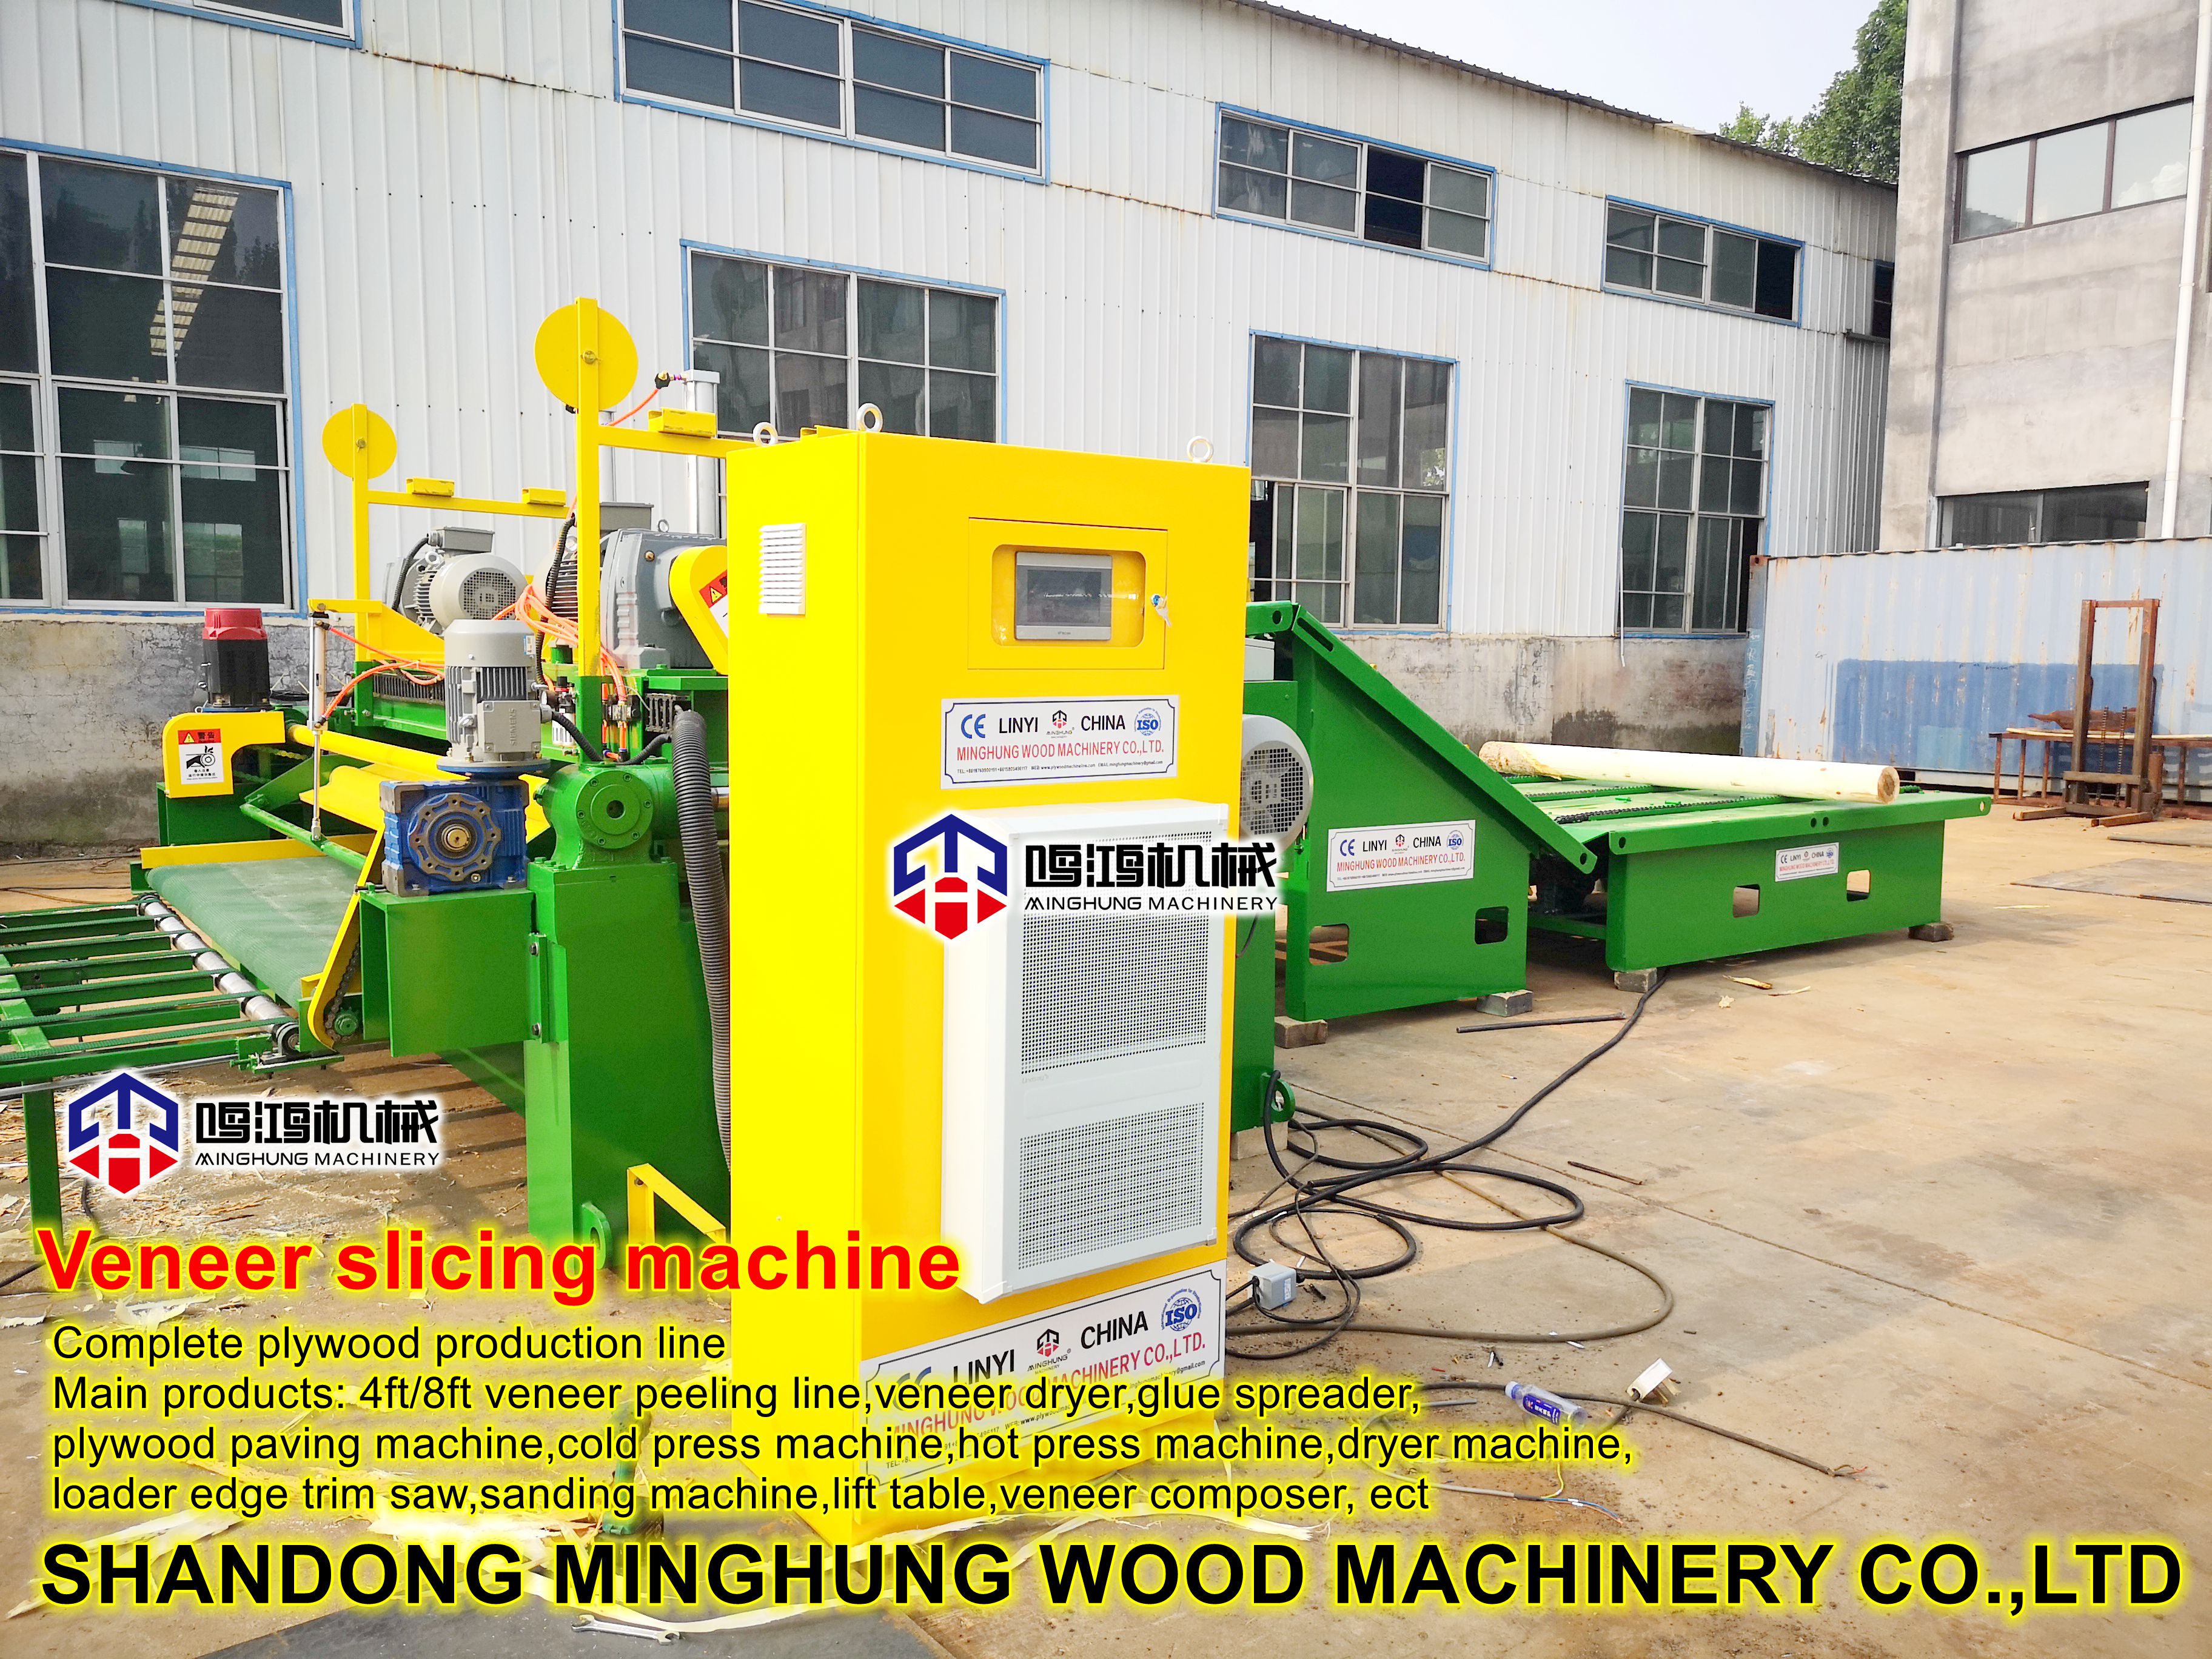 New CNC Woodworking Machinery Veneer Peeling Machine